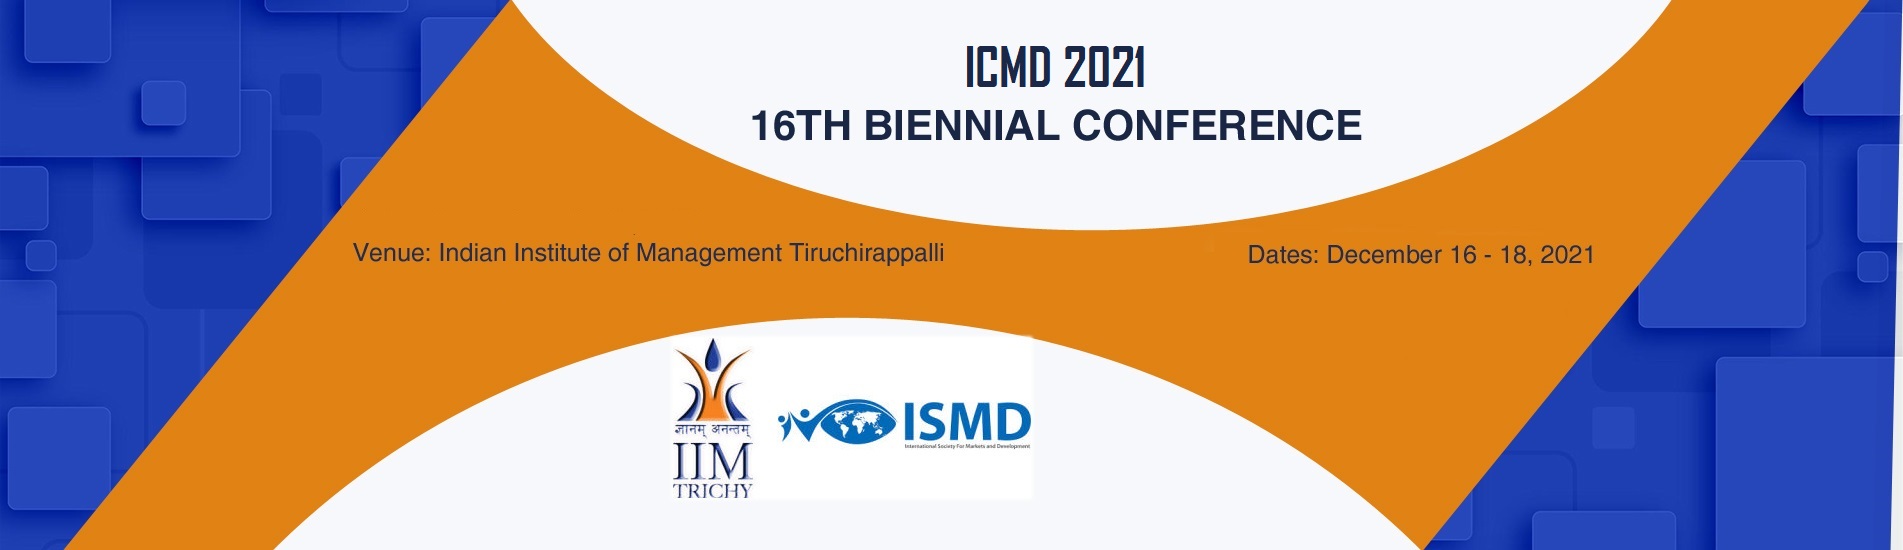 ICMD 2021